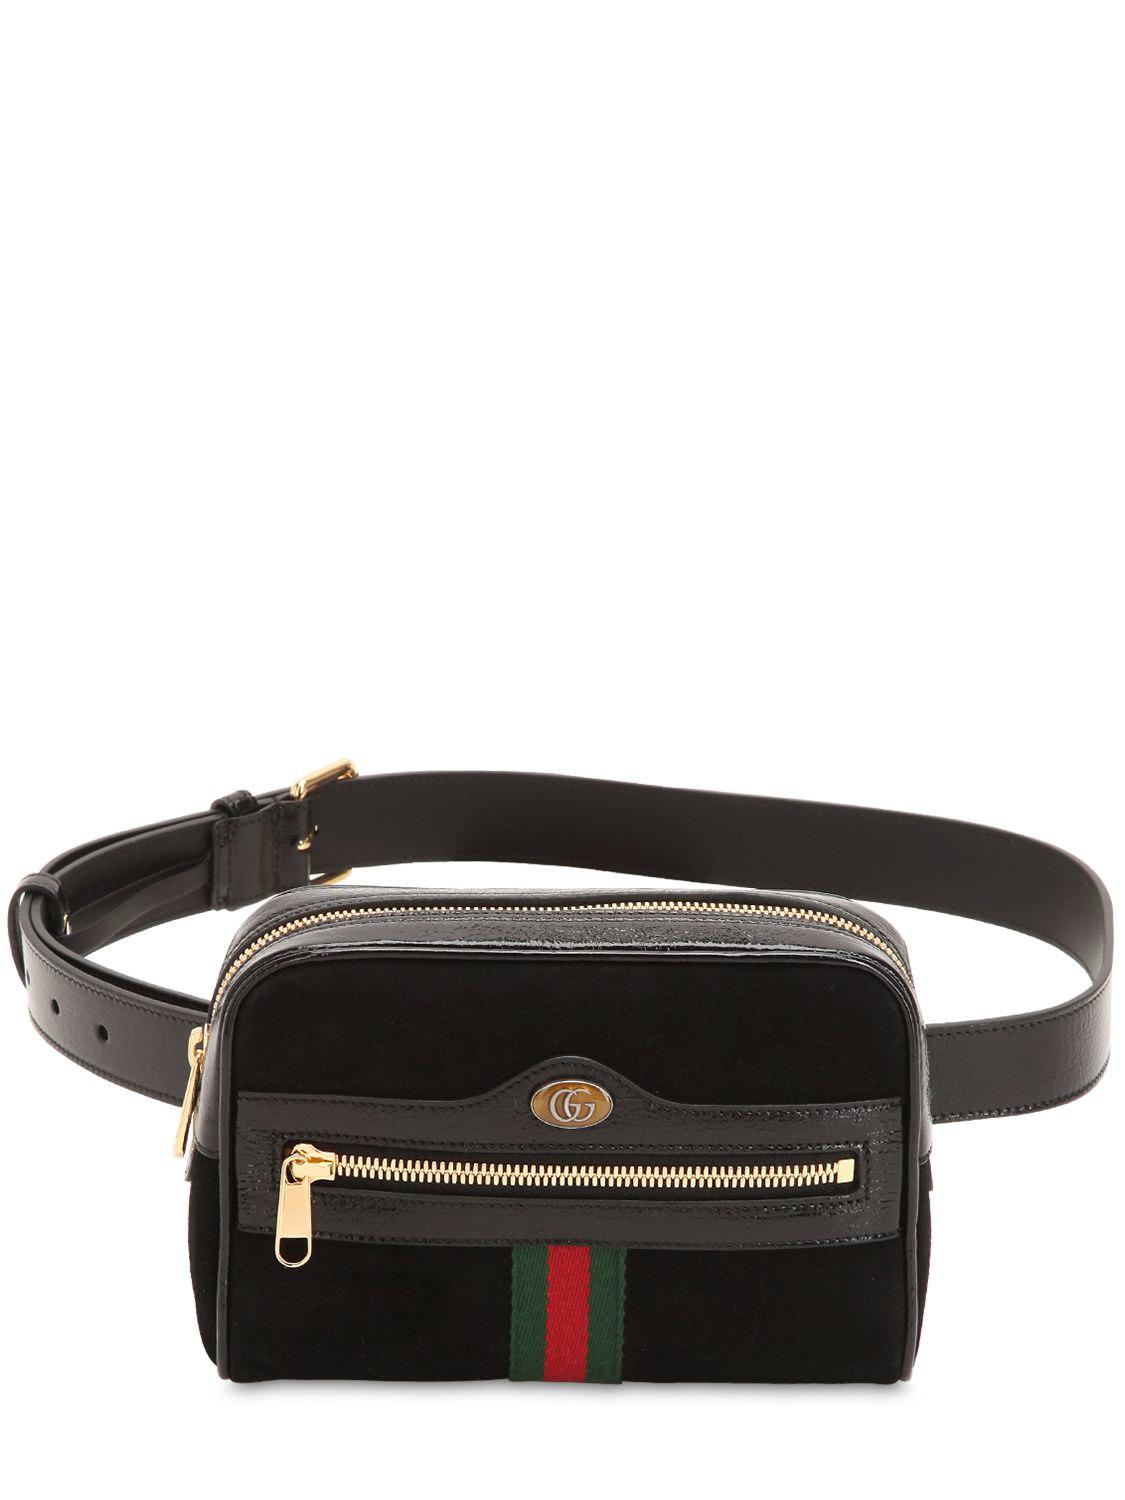 Gucci Ophidia Suede Belt Bag in Black - Lyst